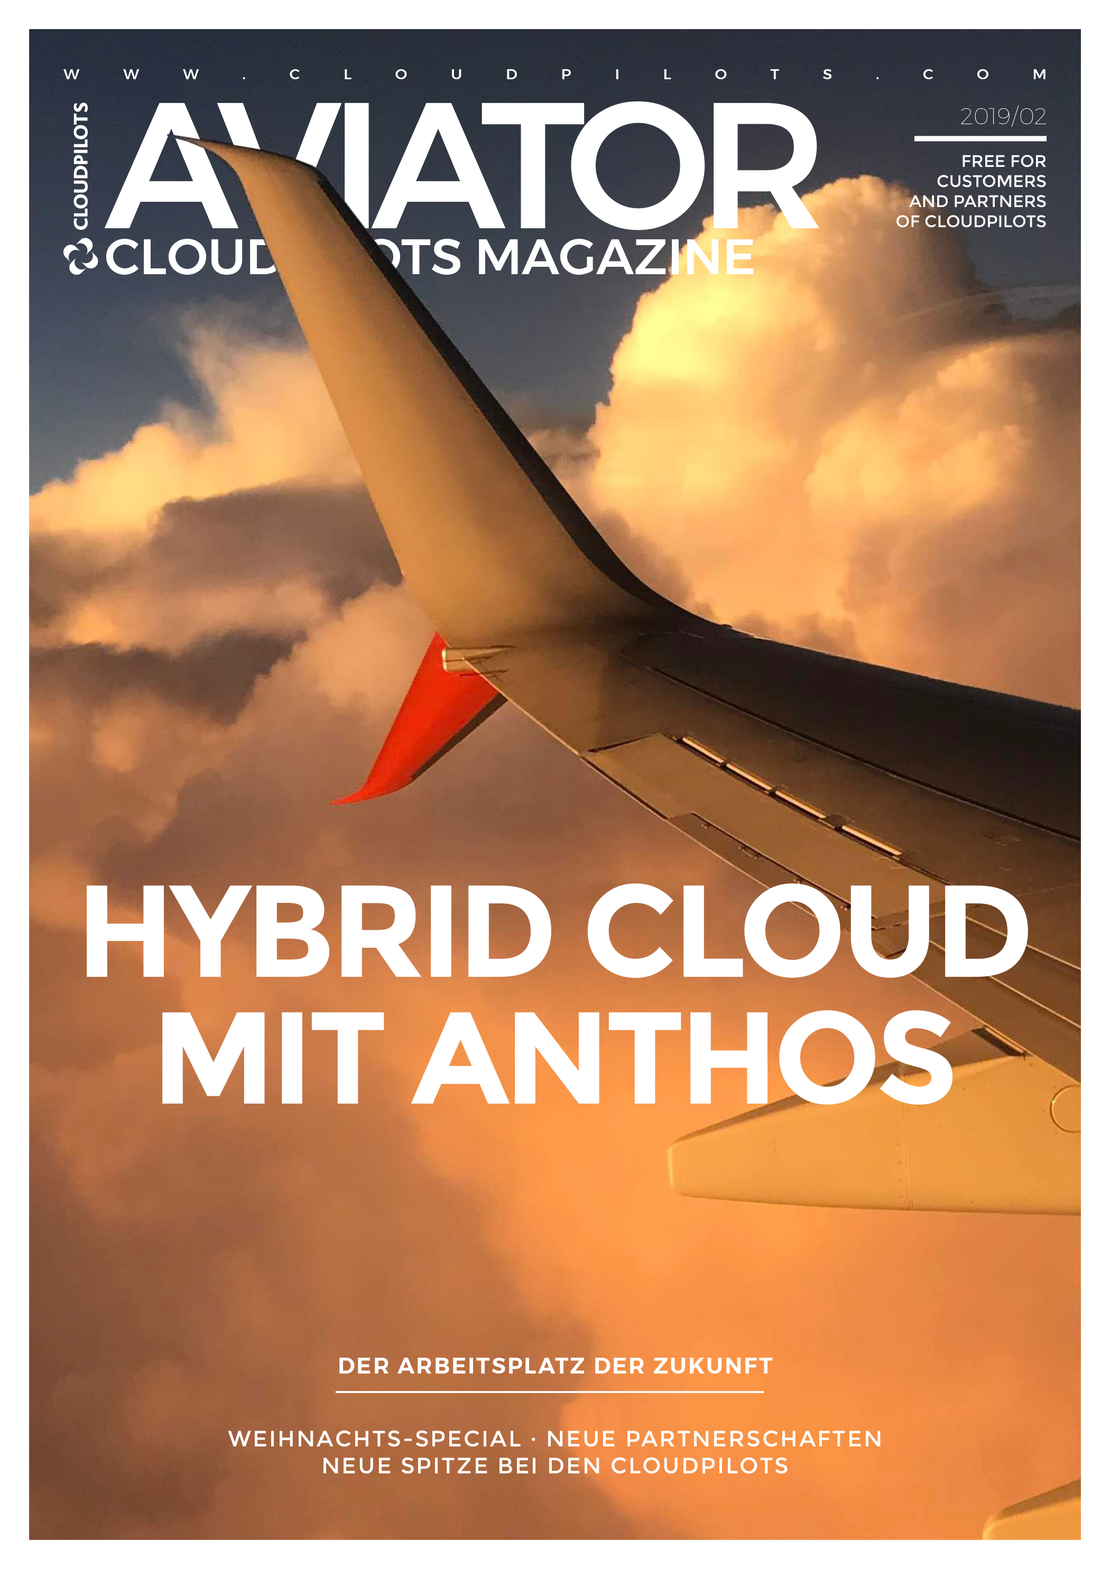 CLOUDPILOTS Kundenmagazin Aviator free download